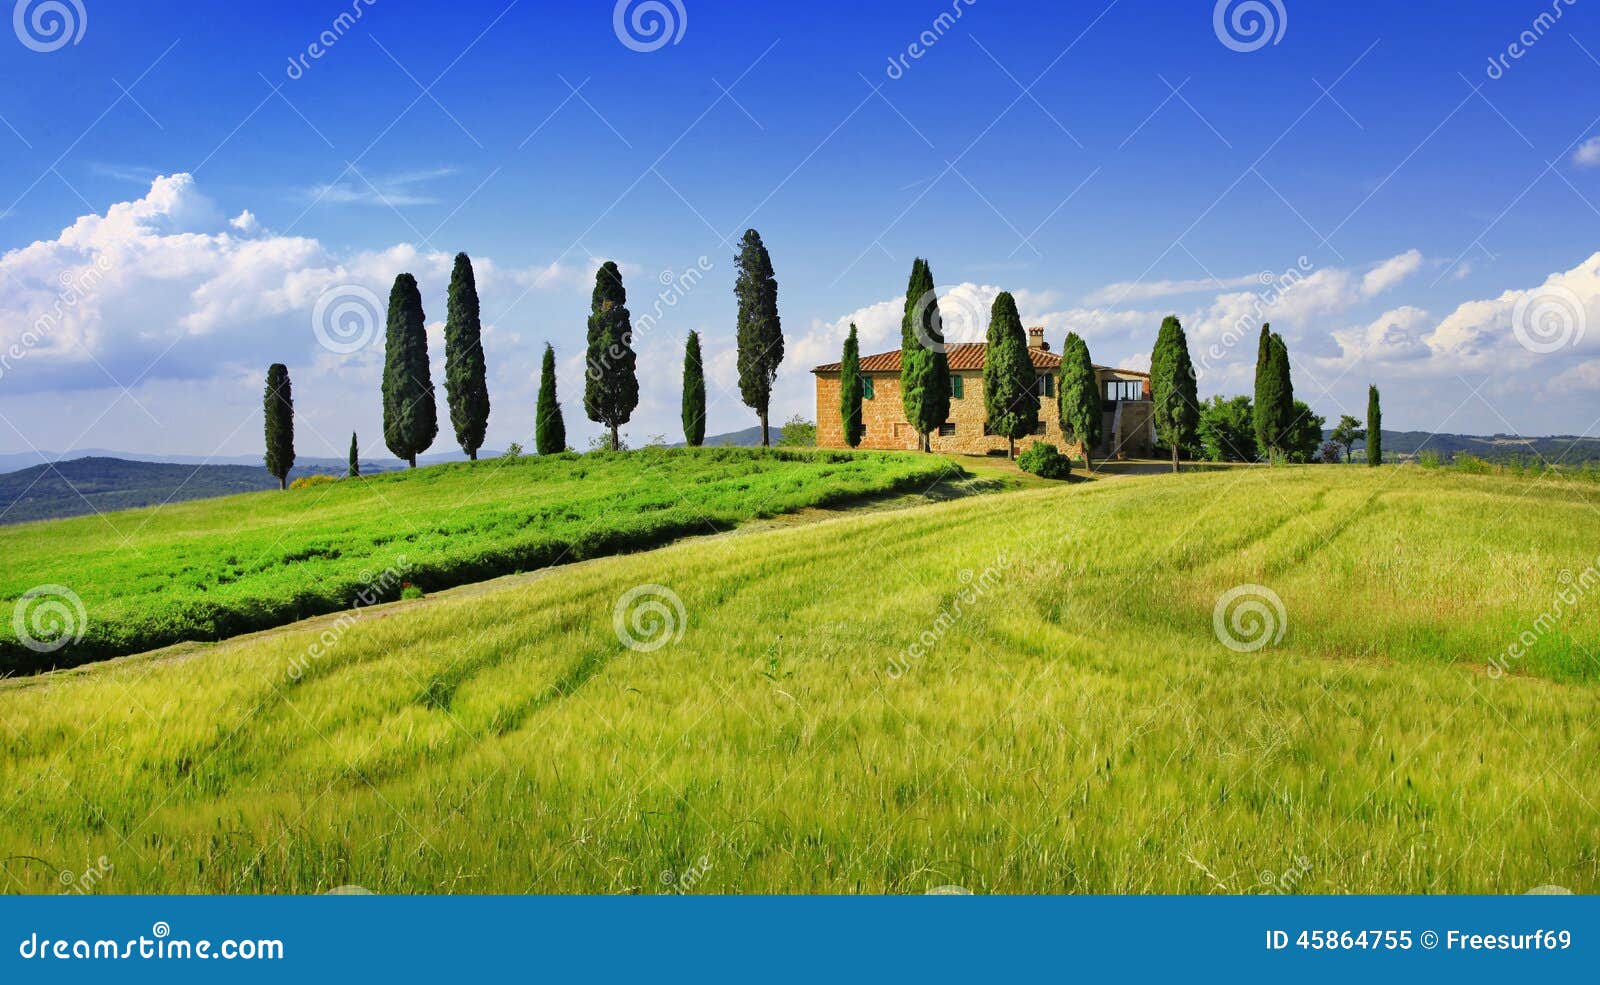 beautiful landscapes of tuscany. italy